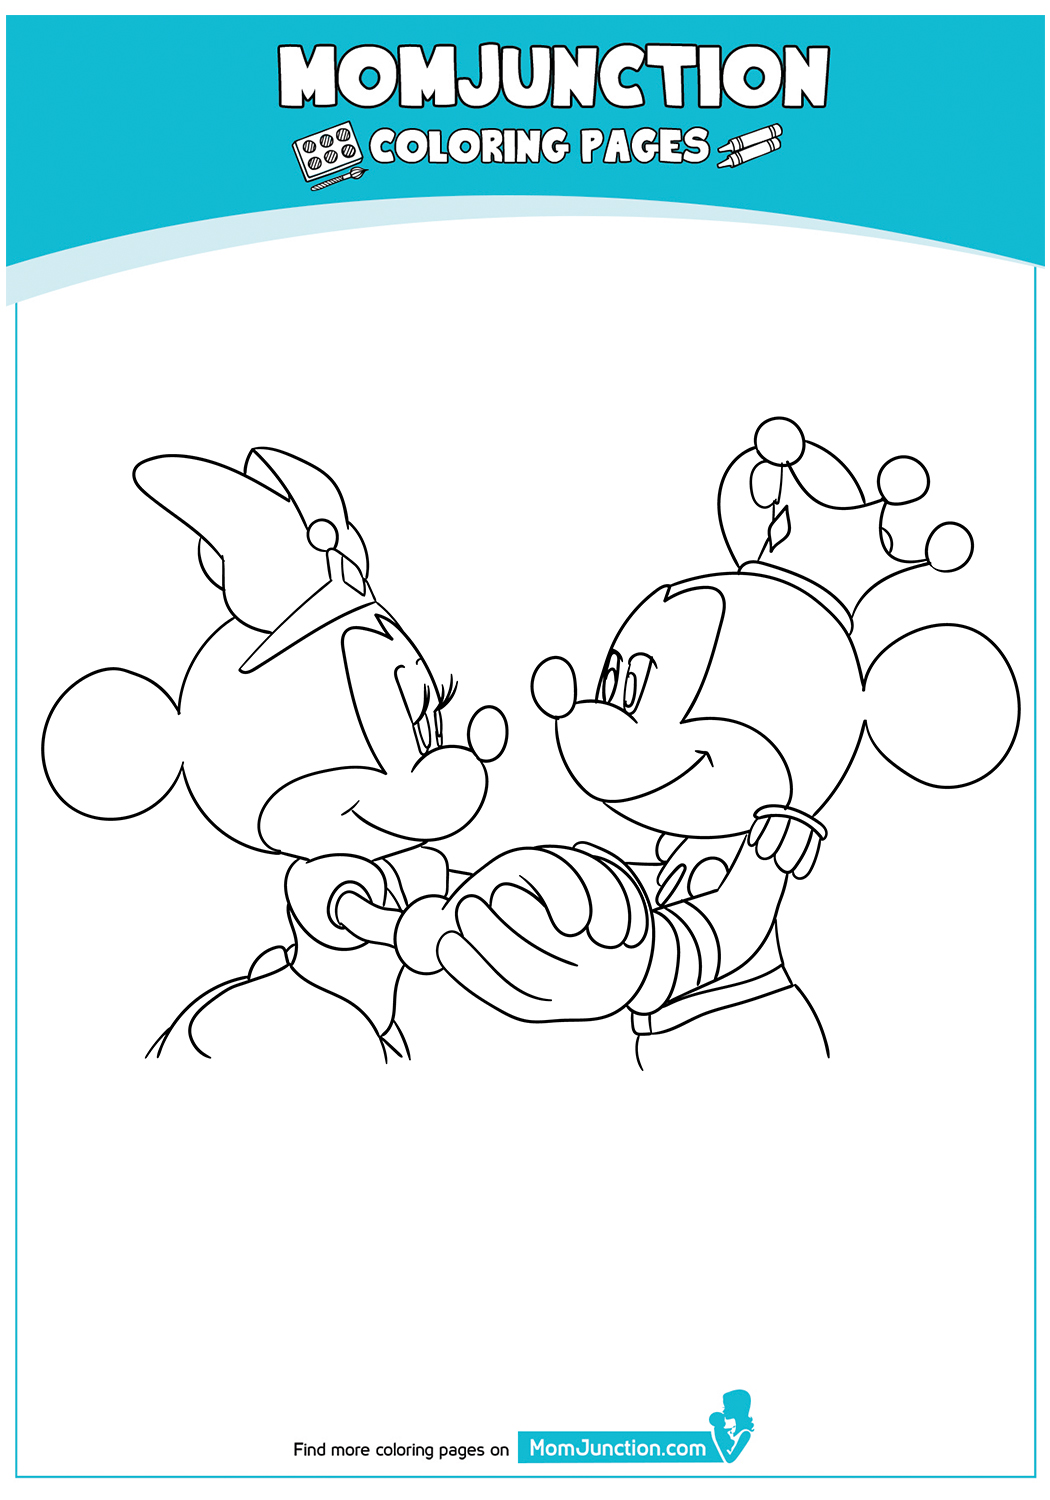 Prince-Mickey-and-Princess-Minnie-17